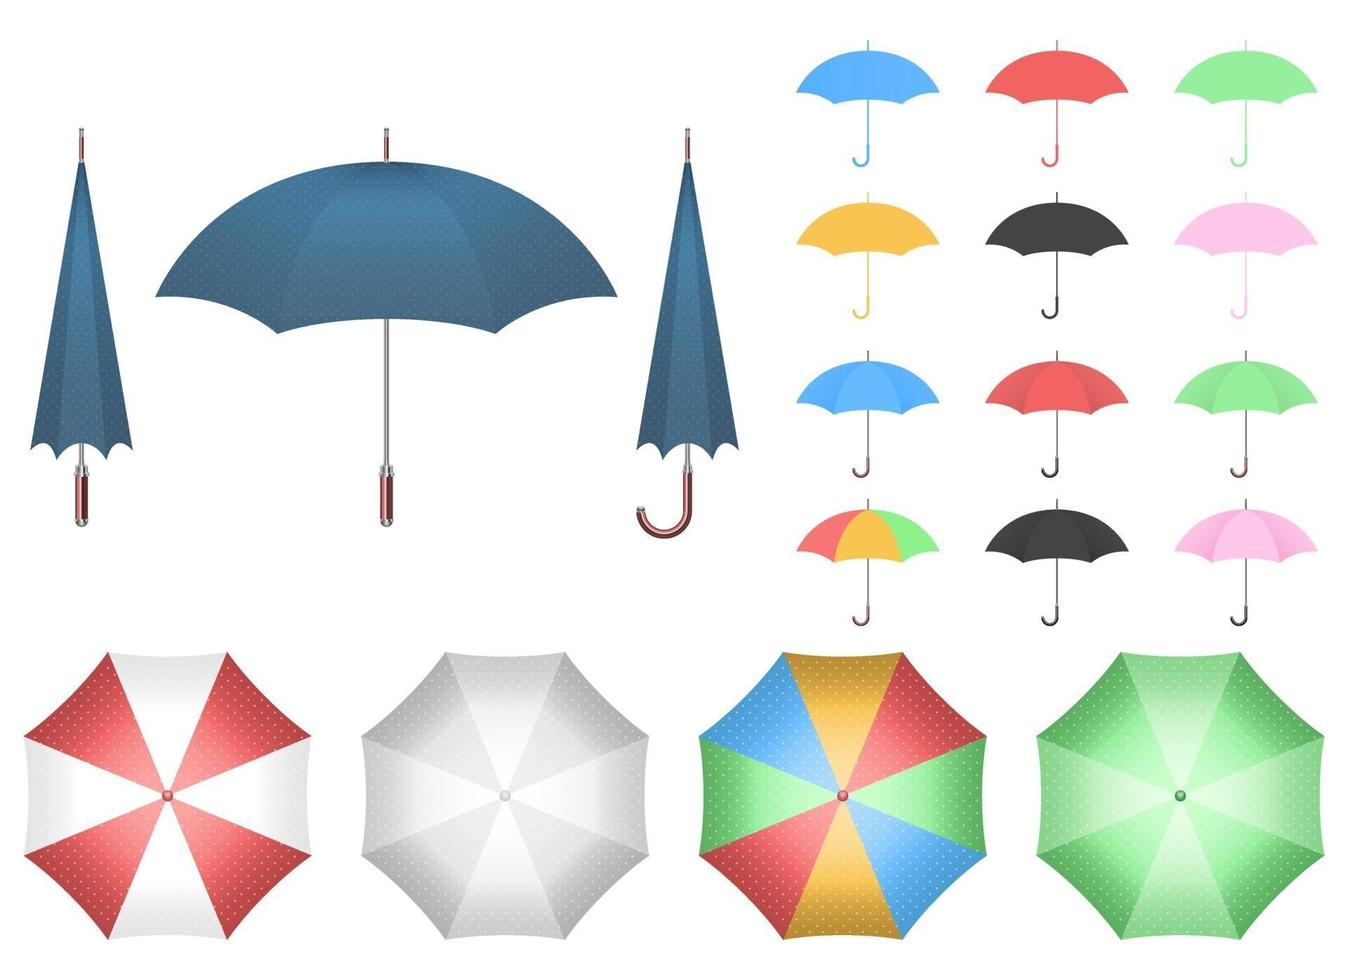 ilustração vetorial de guarda-chuva conjunto isolado no fundo branco vetor